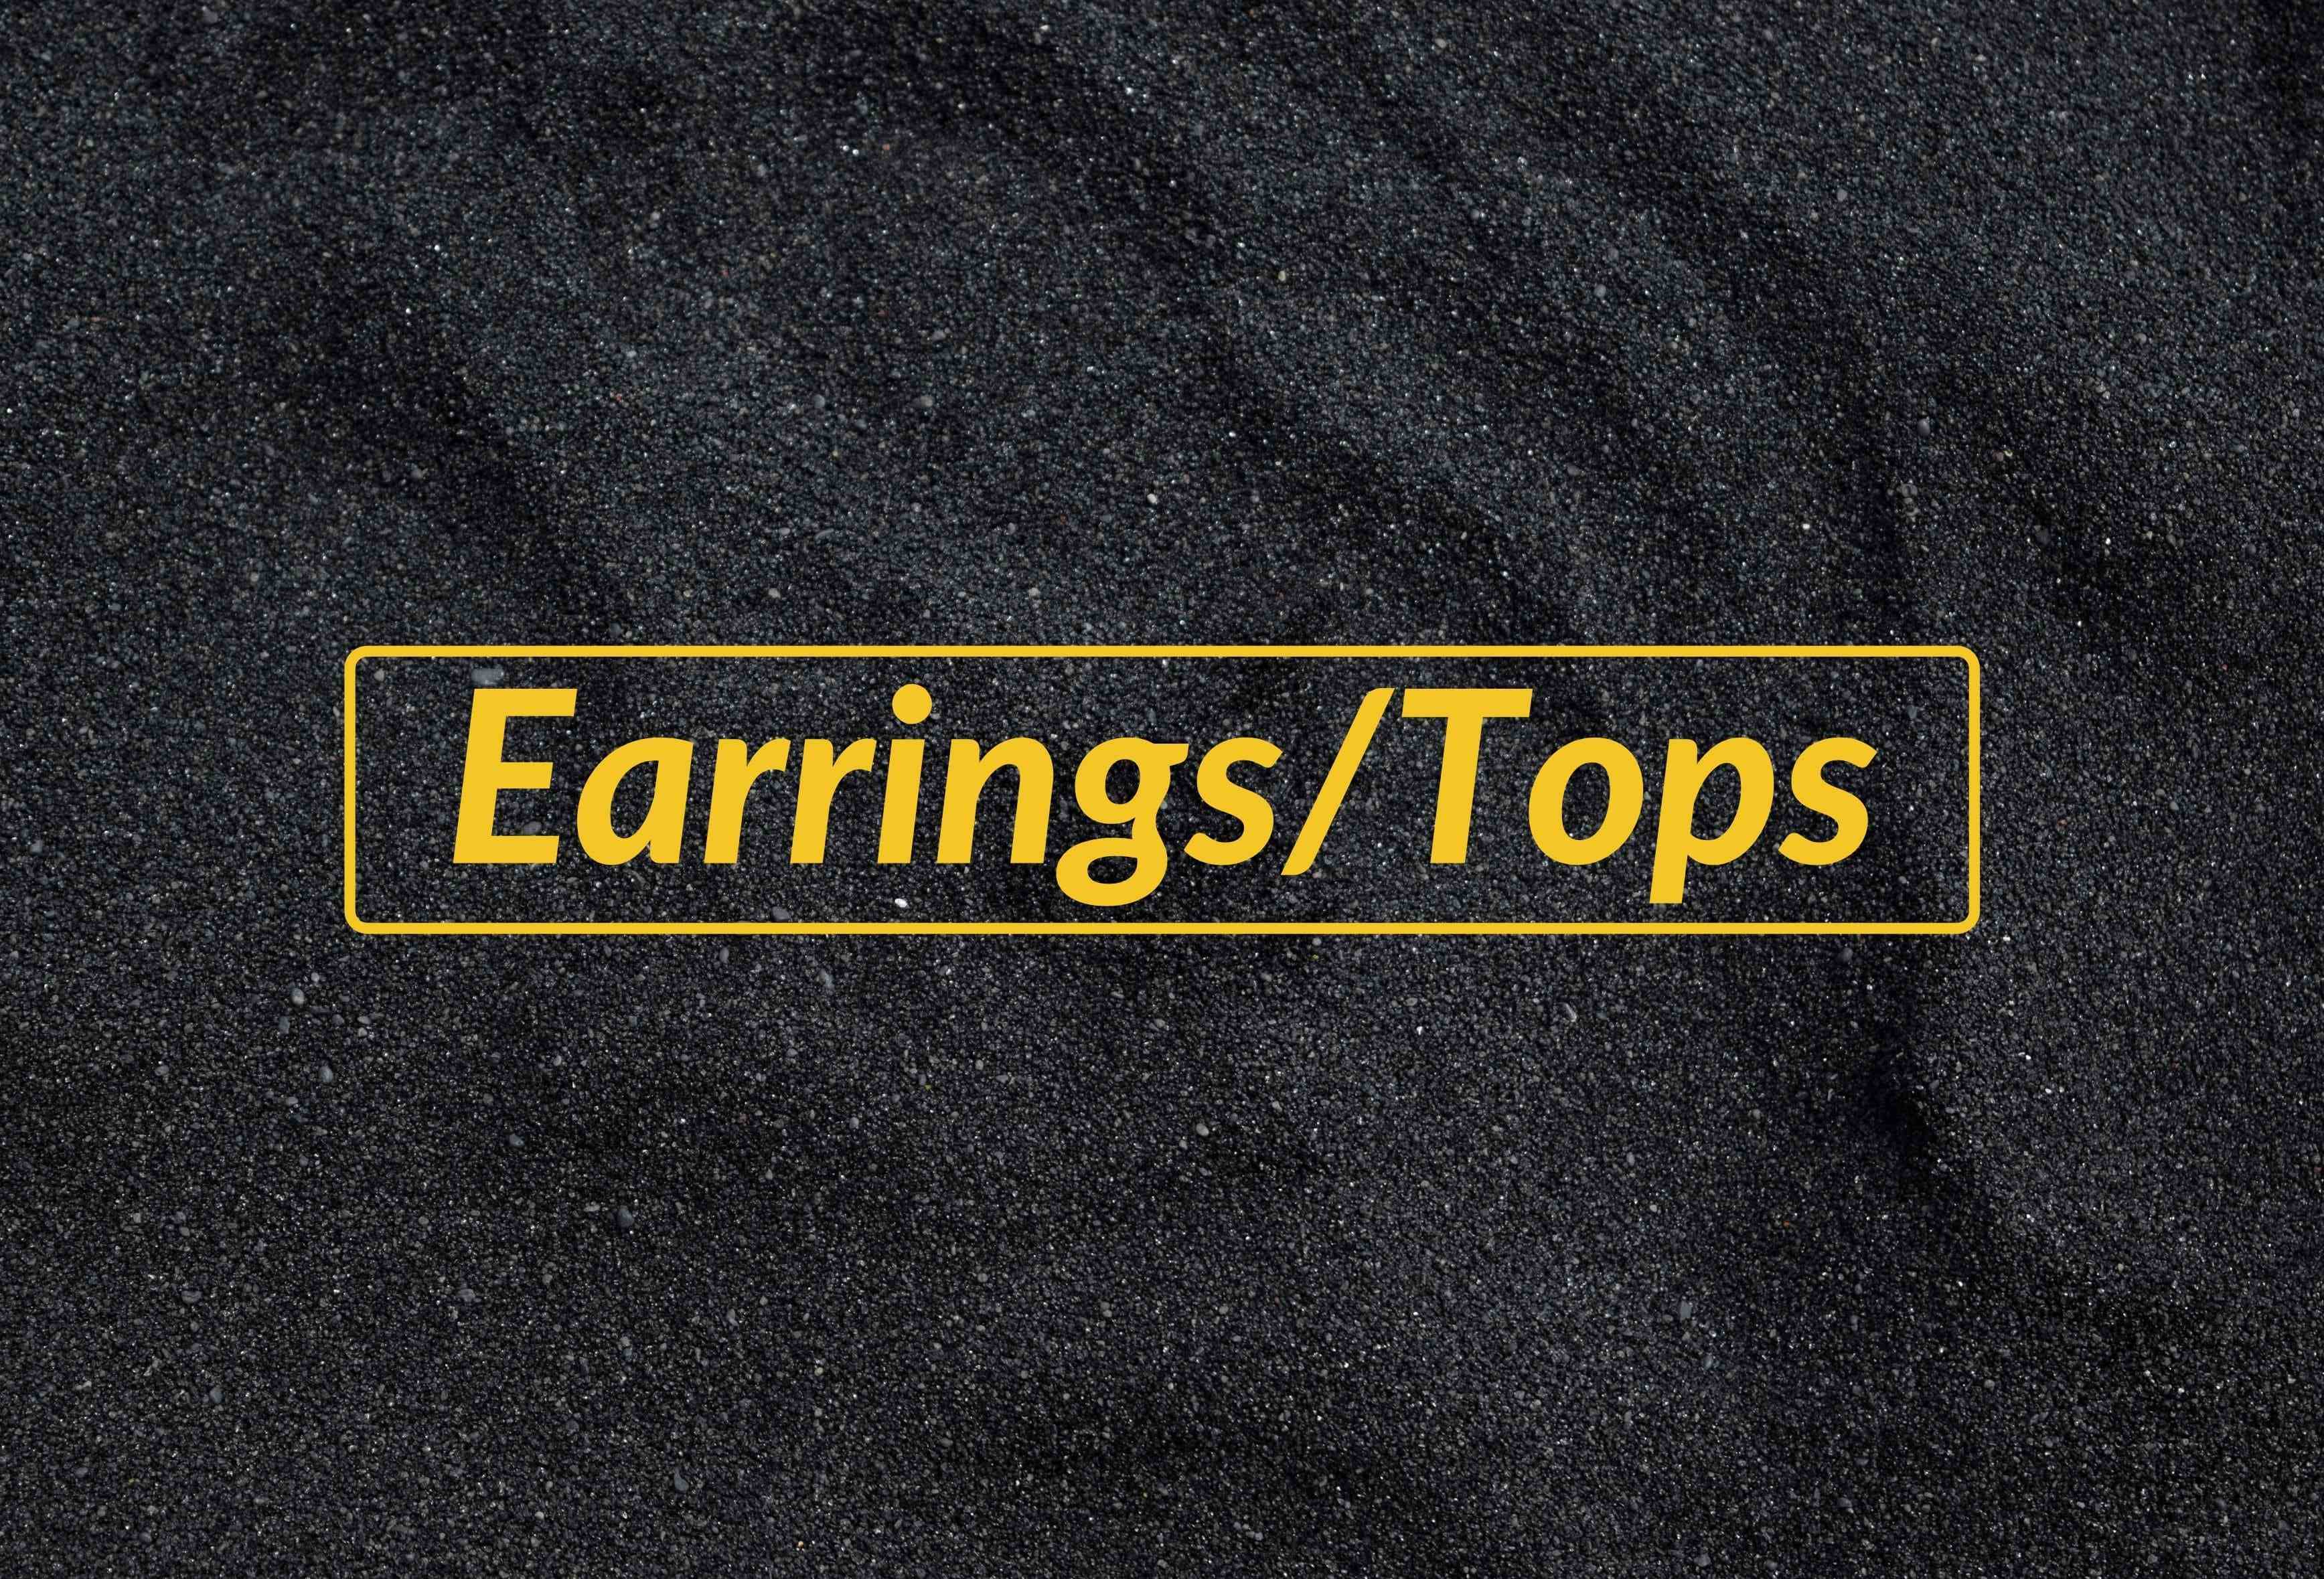 Earrings/Tops